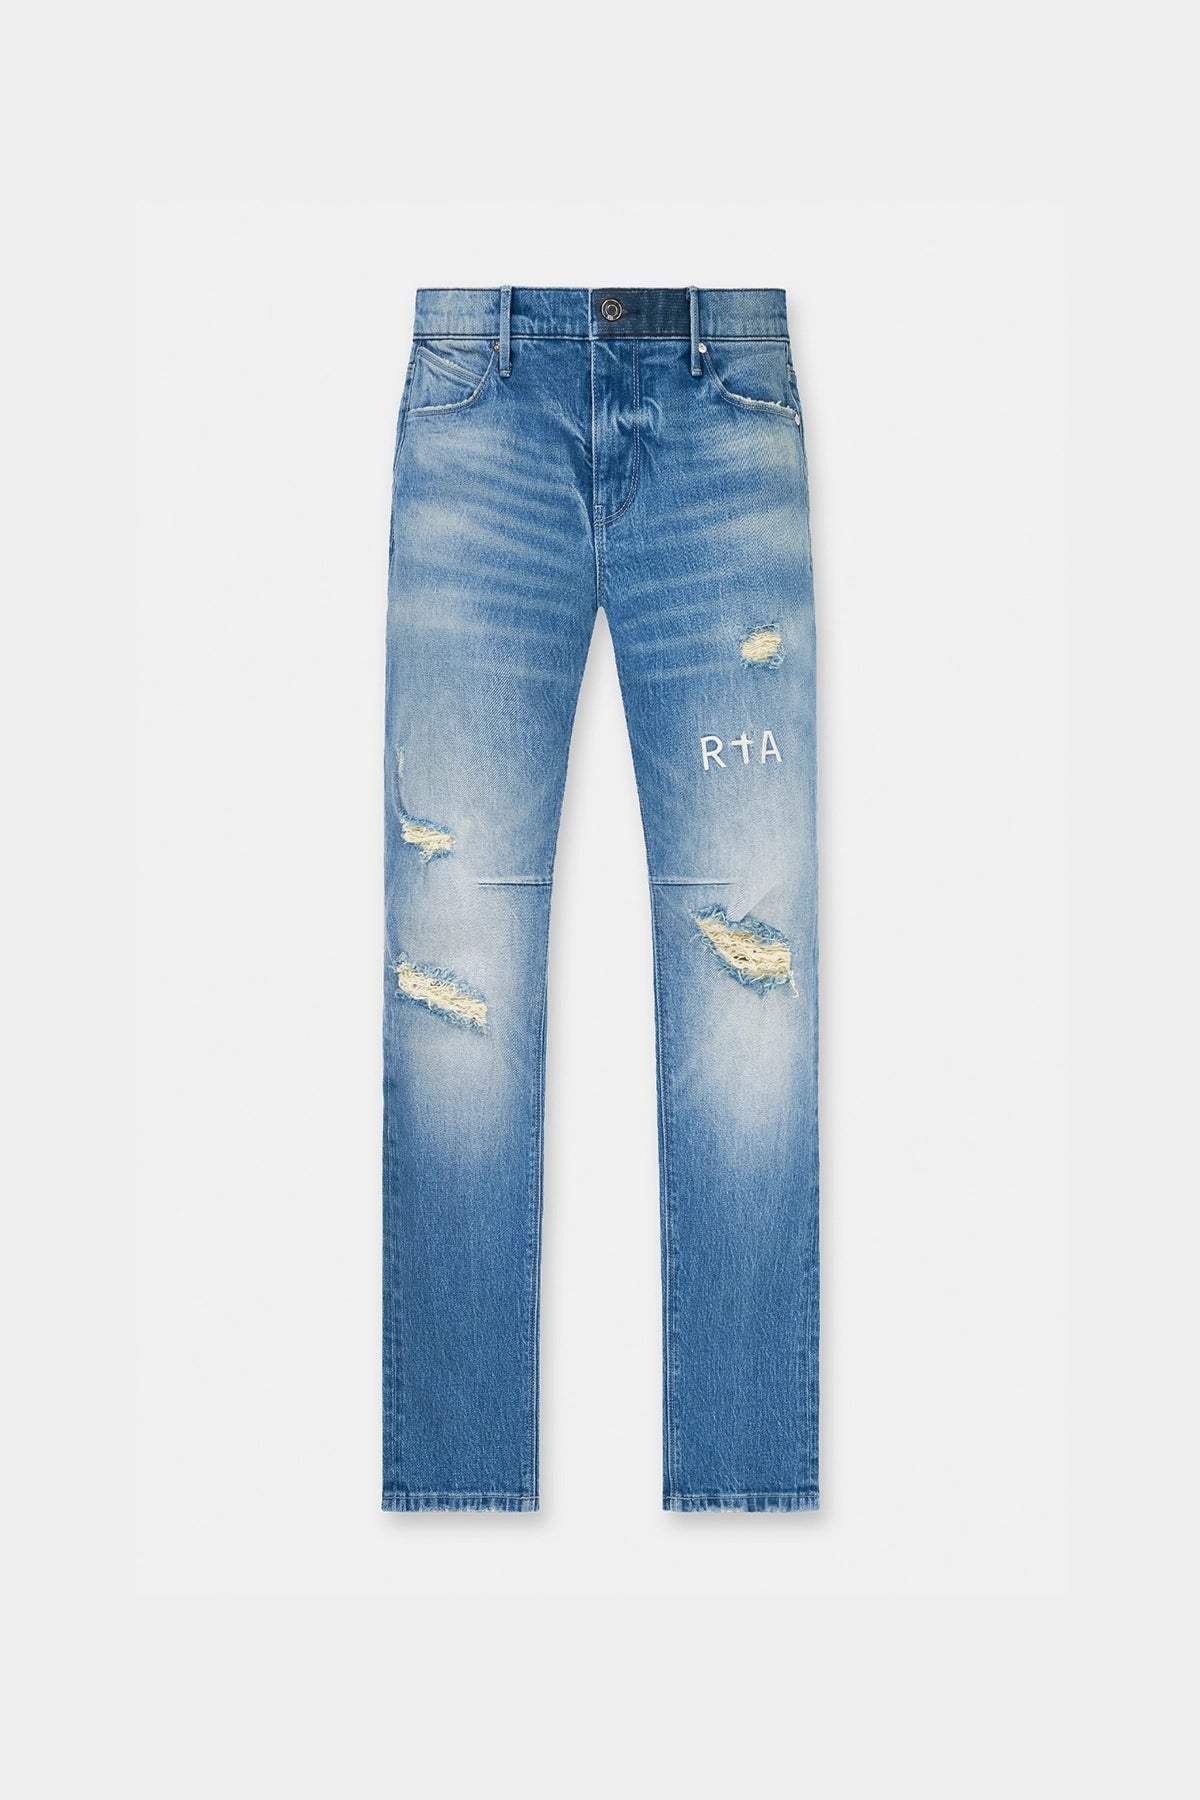 Reelistik Tan Blue Stacked Jeans (RST5024-3) – Era Clothing Store